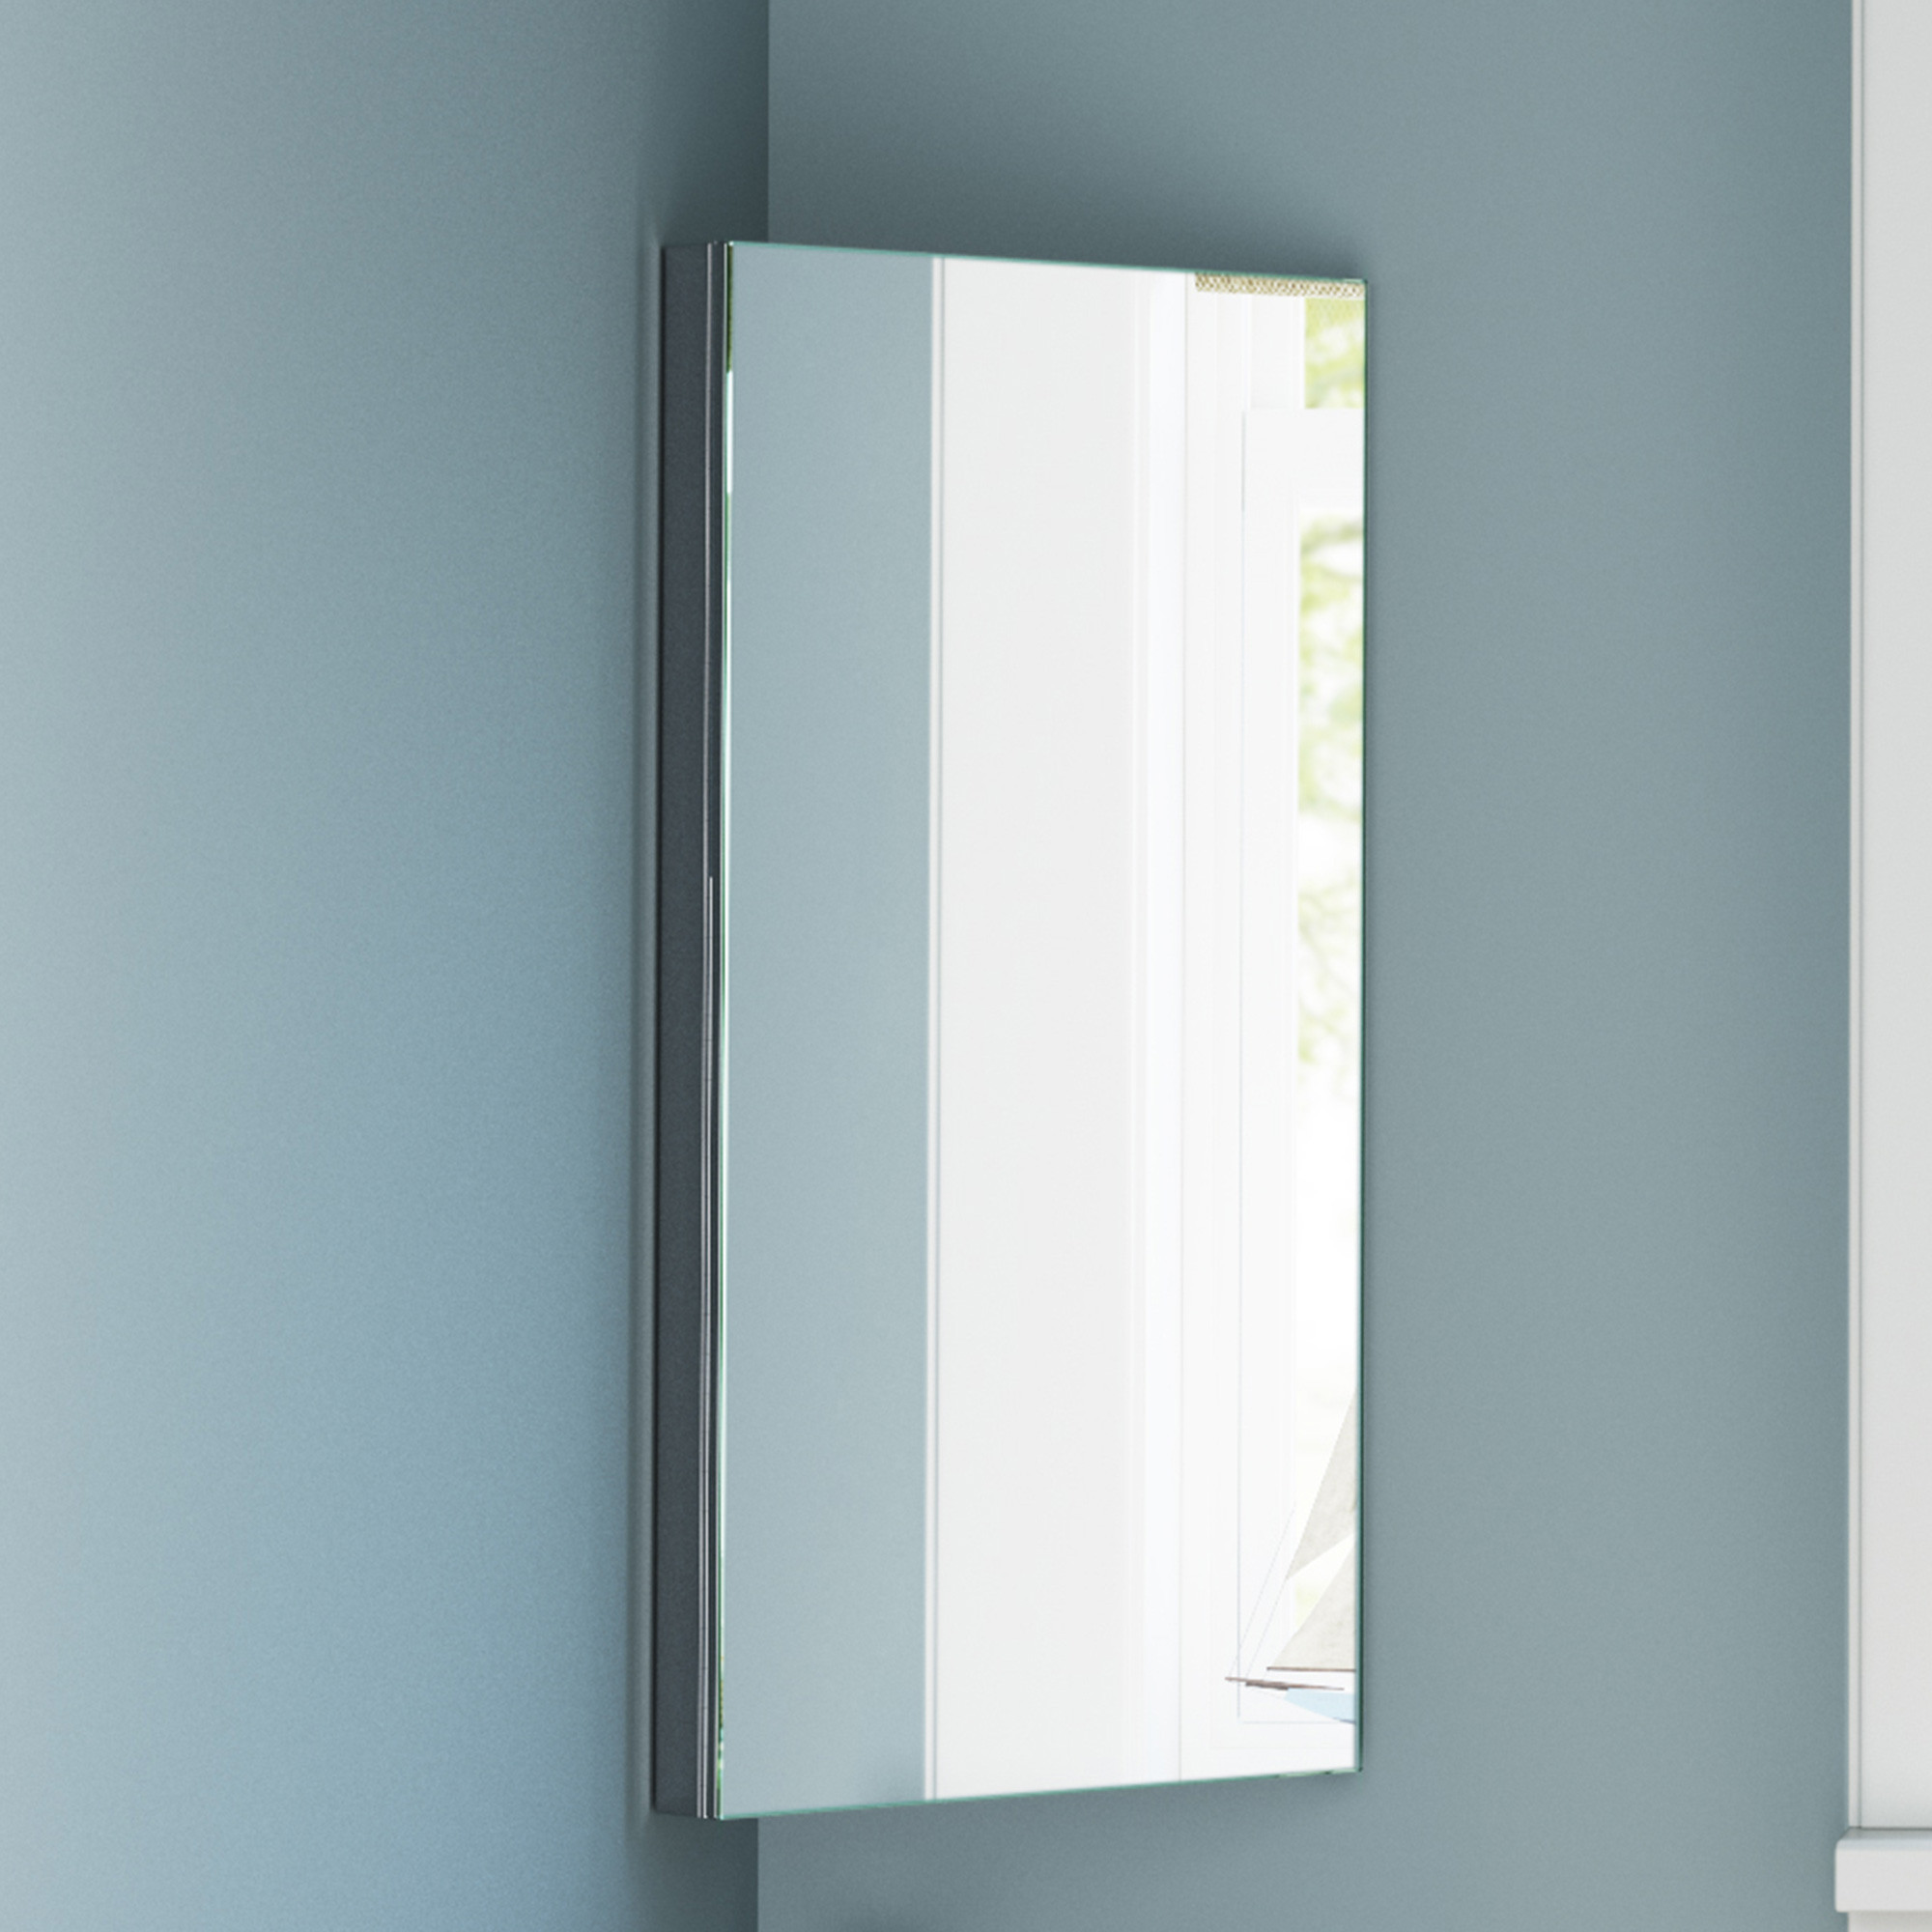 Corner Bathroom Mirror
 600x300mm Liberty Stainless Steel Corner Mirror Cabinet